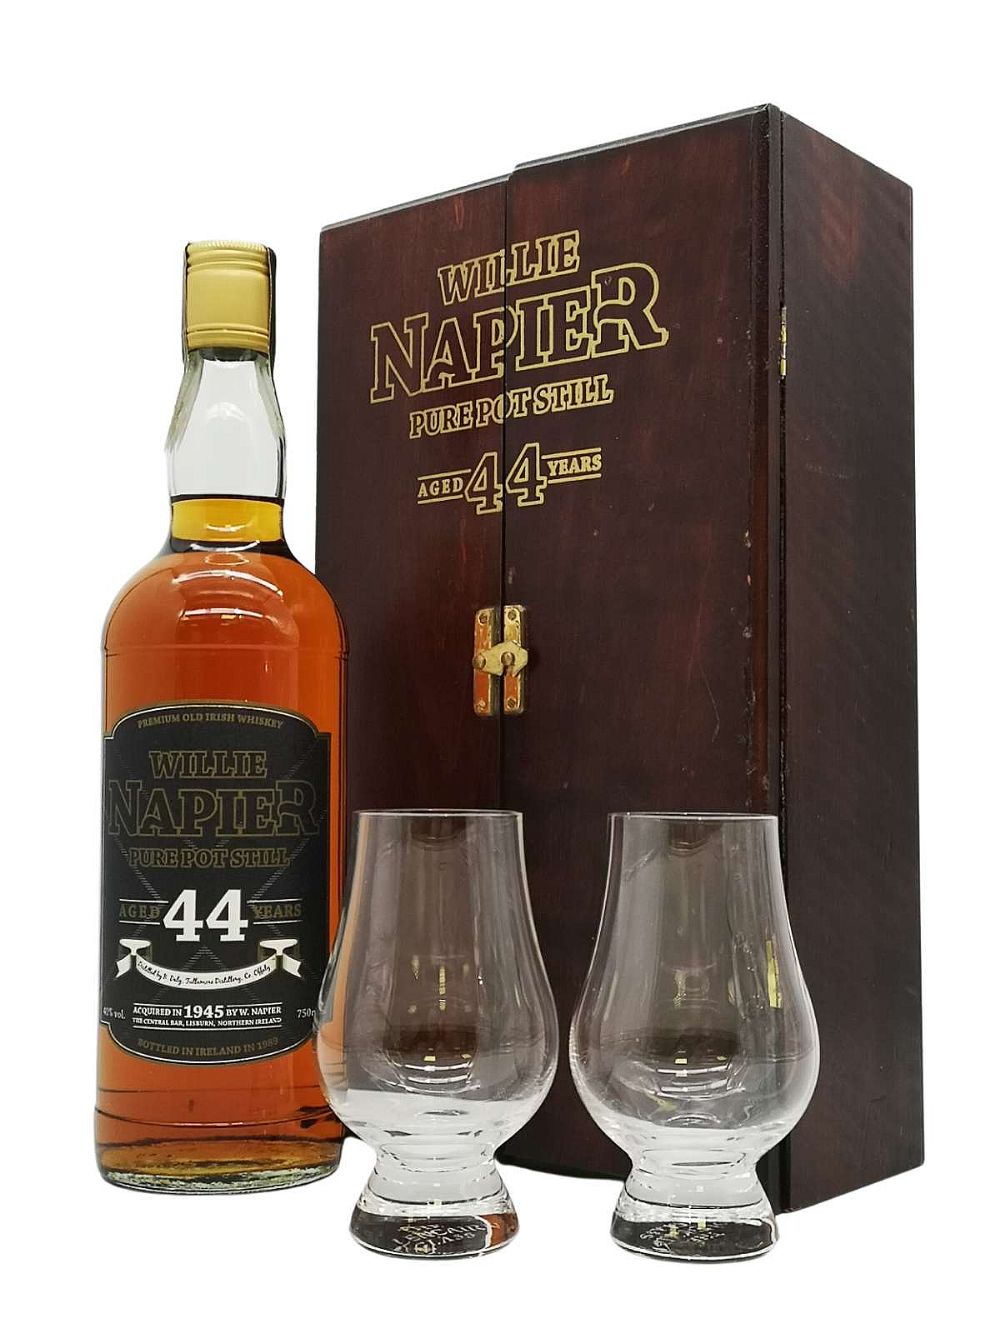 Willie Napier B. Daly Tullamore 44 year old Pure Pot Still Irish Whiskey